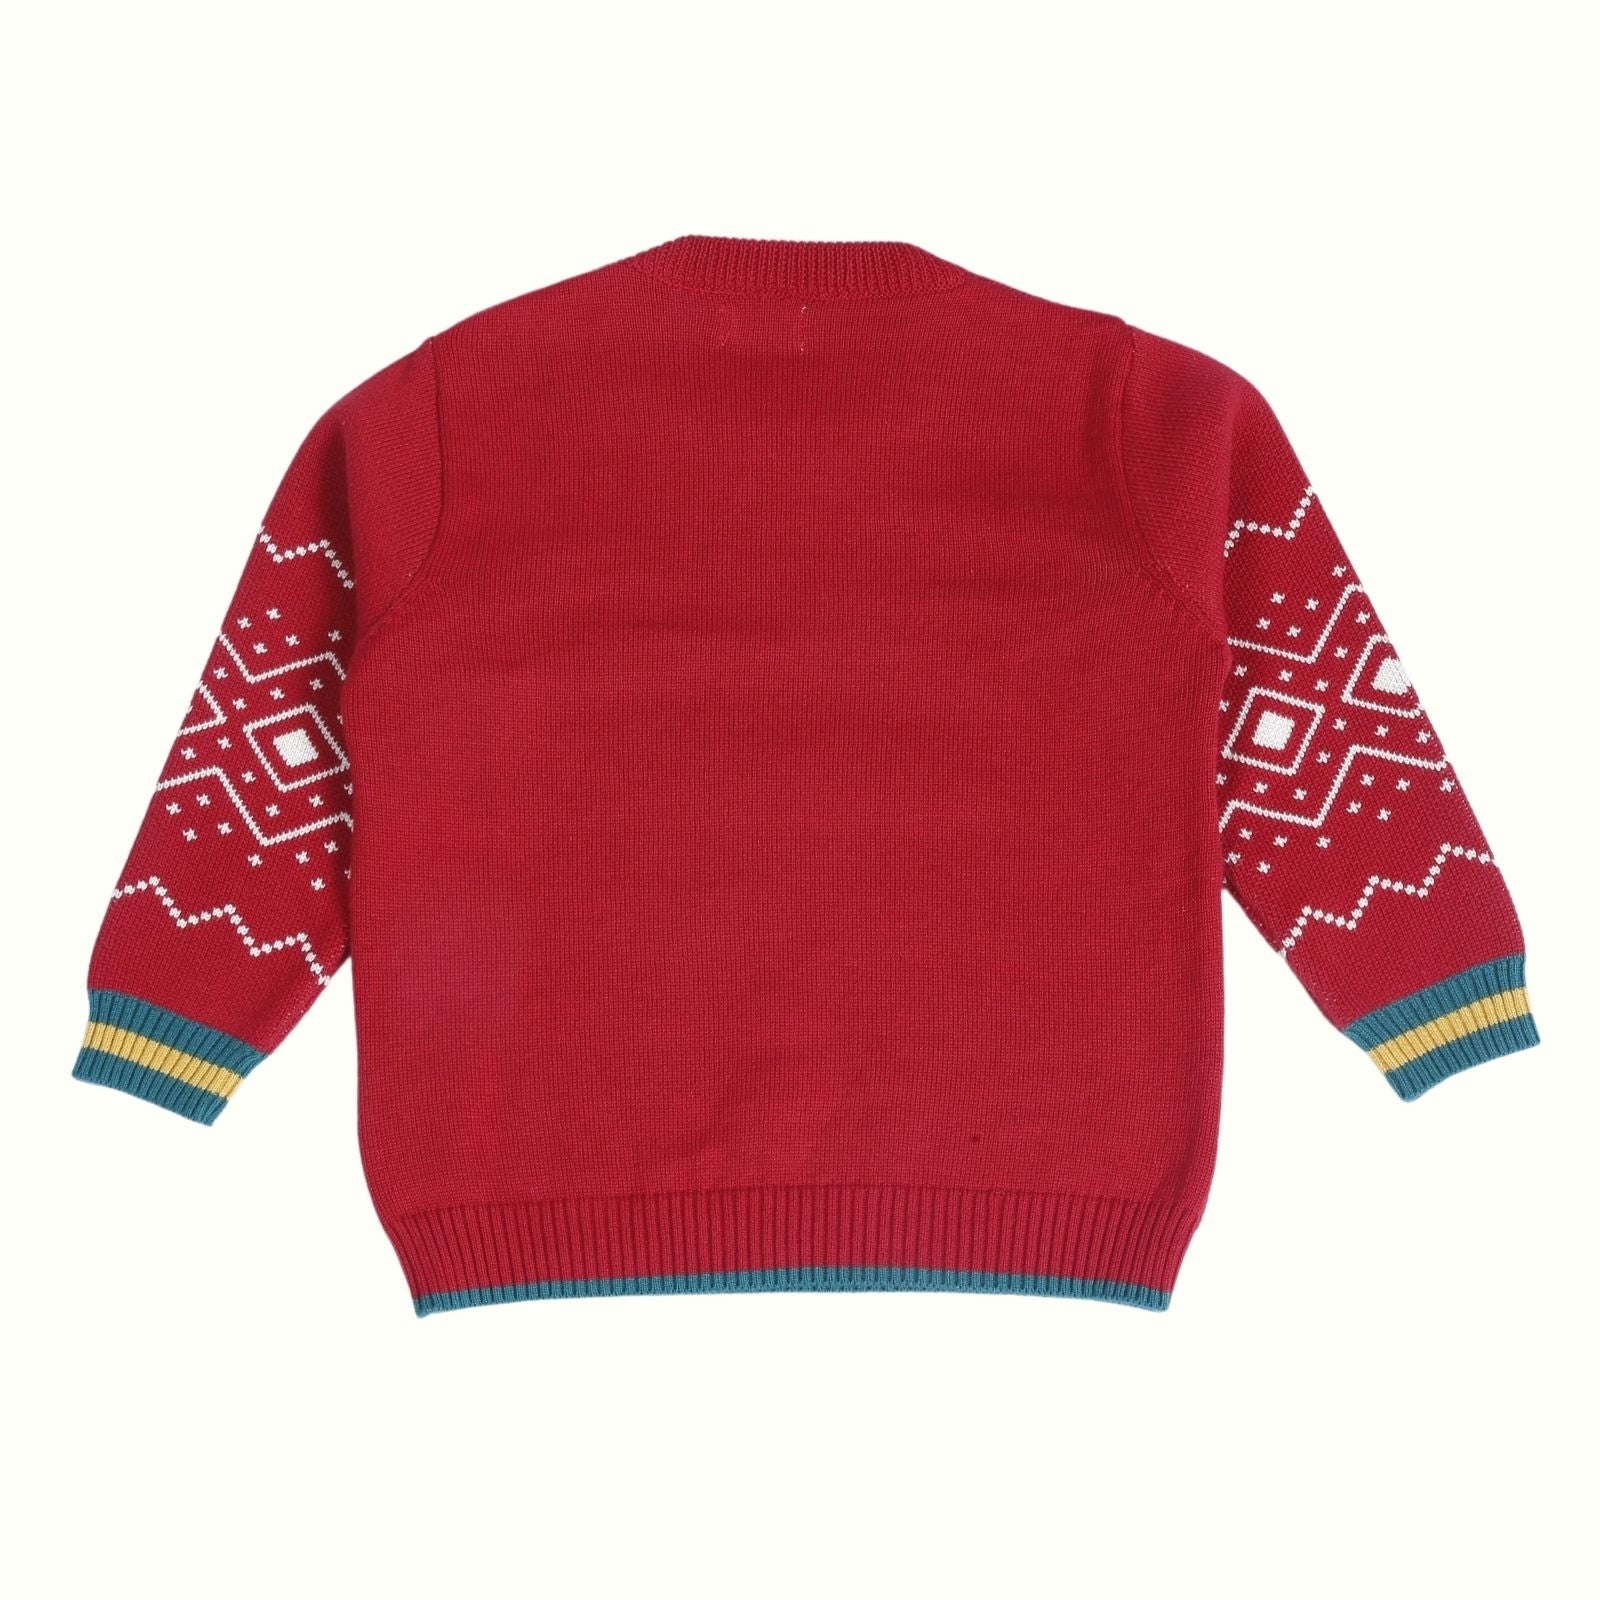 Greendeer Santa & Jaunty/Joyful Reindeer 100% Cotton Sweater with Lower Set of 5